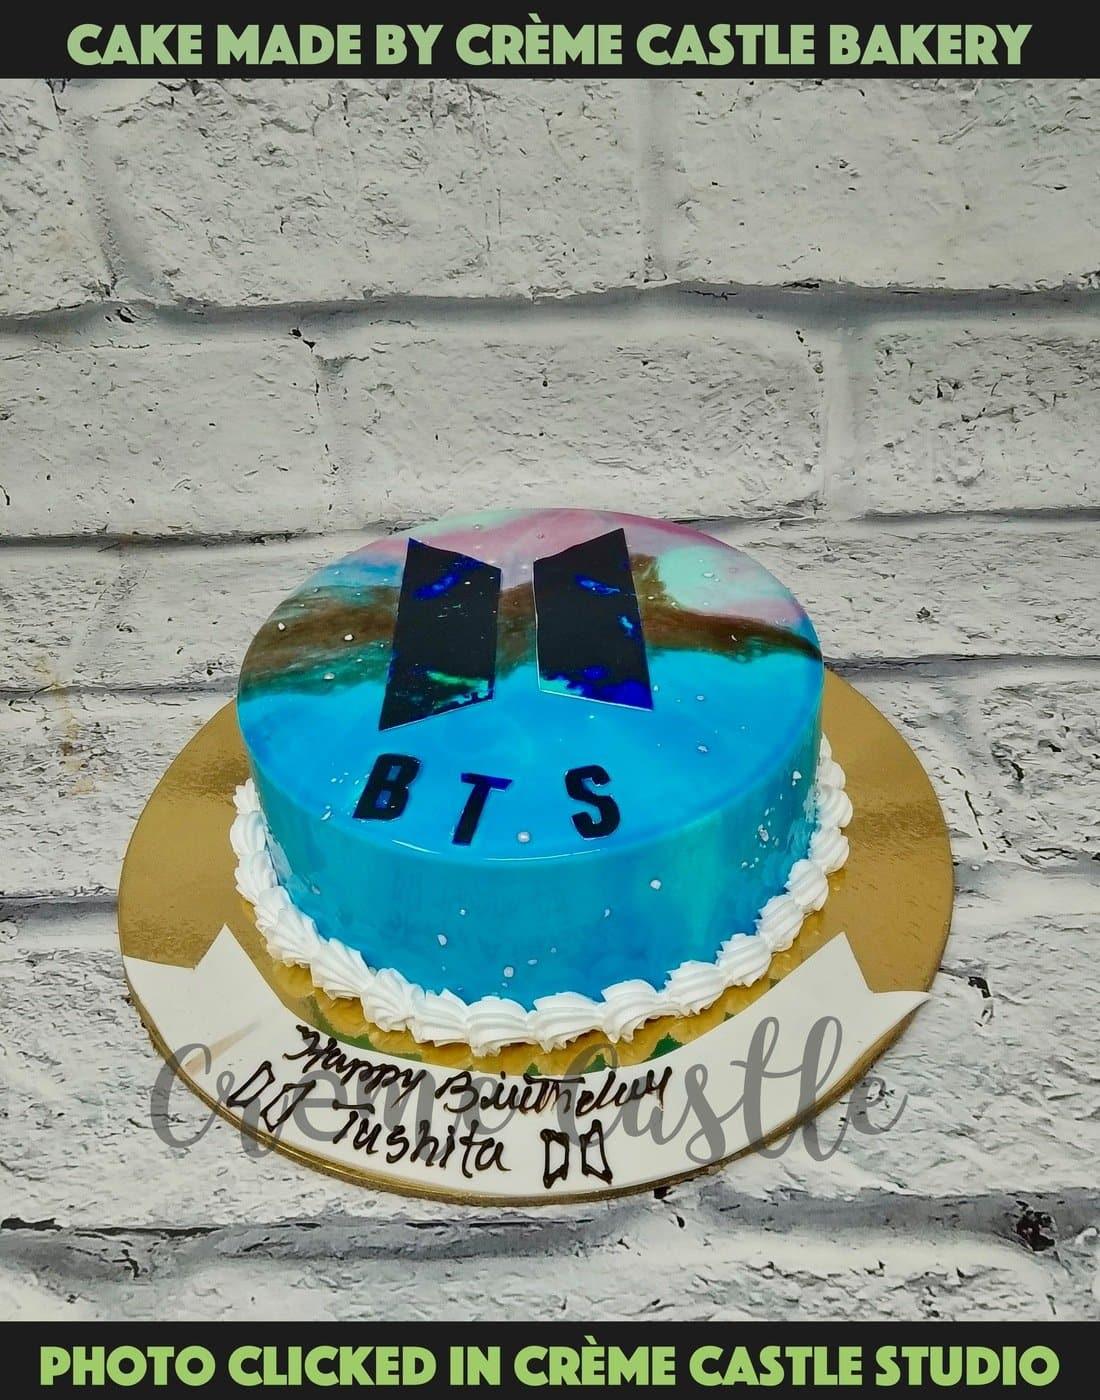 BTS Cake | Bts cake, Simple birthday cake, Cake designs for girl